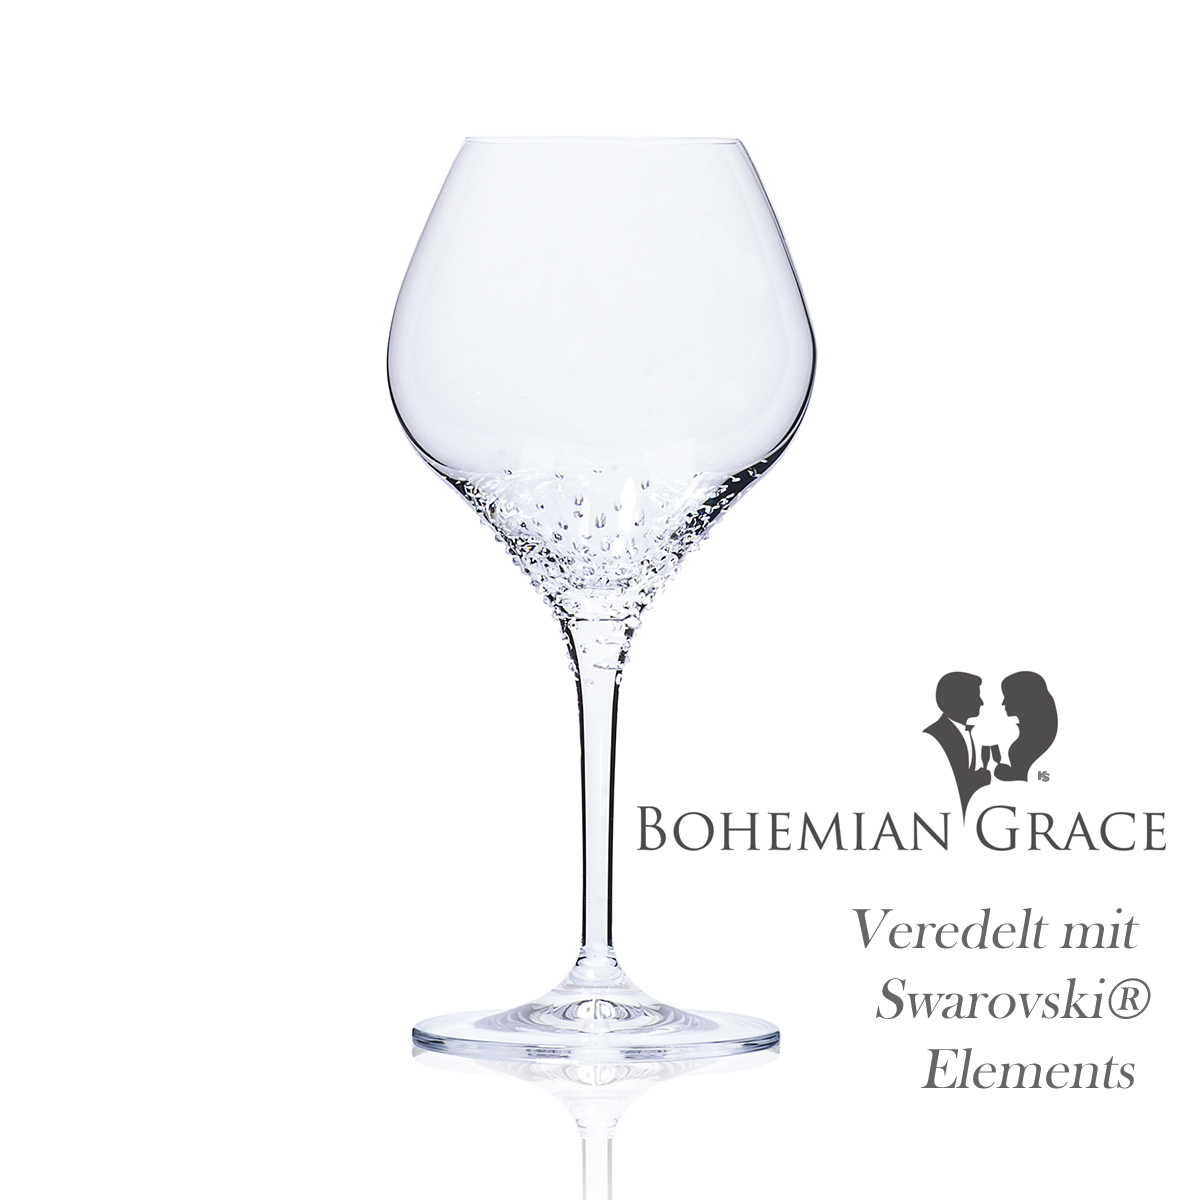 Weinglas 2Stk NISOS Bohemian Grace - Weissweingläser NISOS 2Stk, mit Swarovski Elements